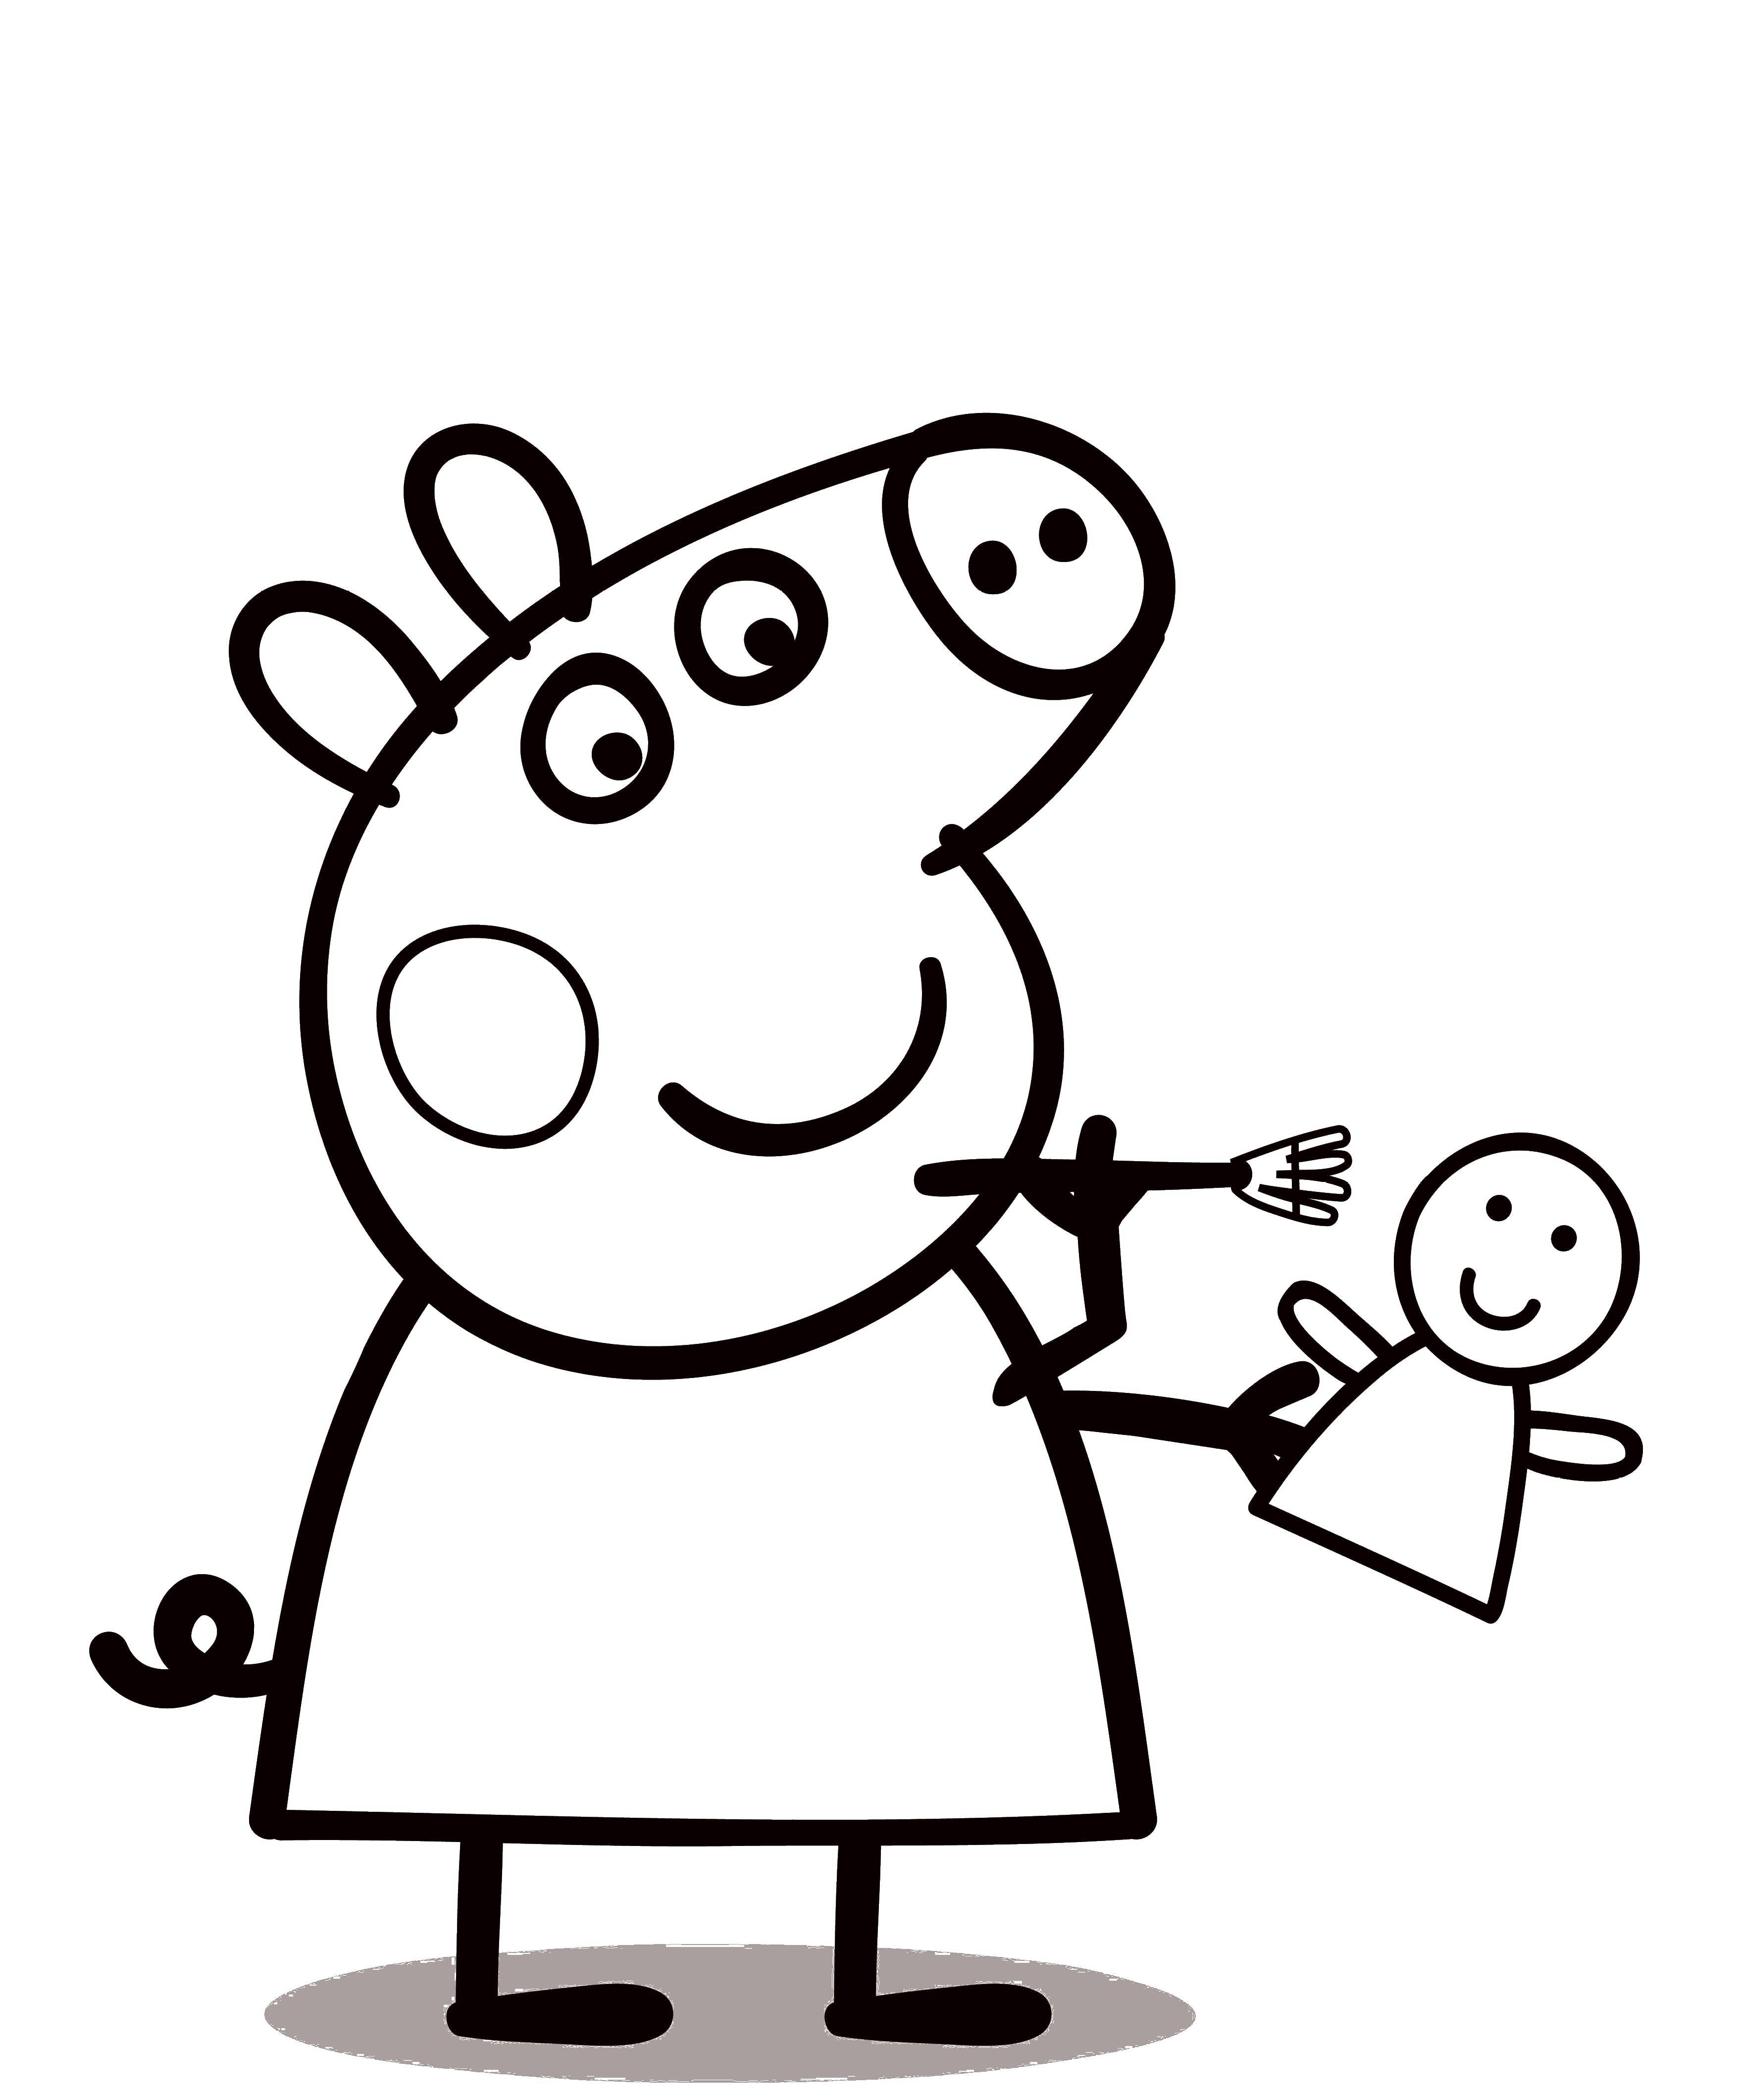 Coloring Peppa pig. Category Cartoon character. Tags:  pig.